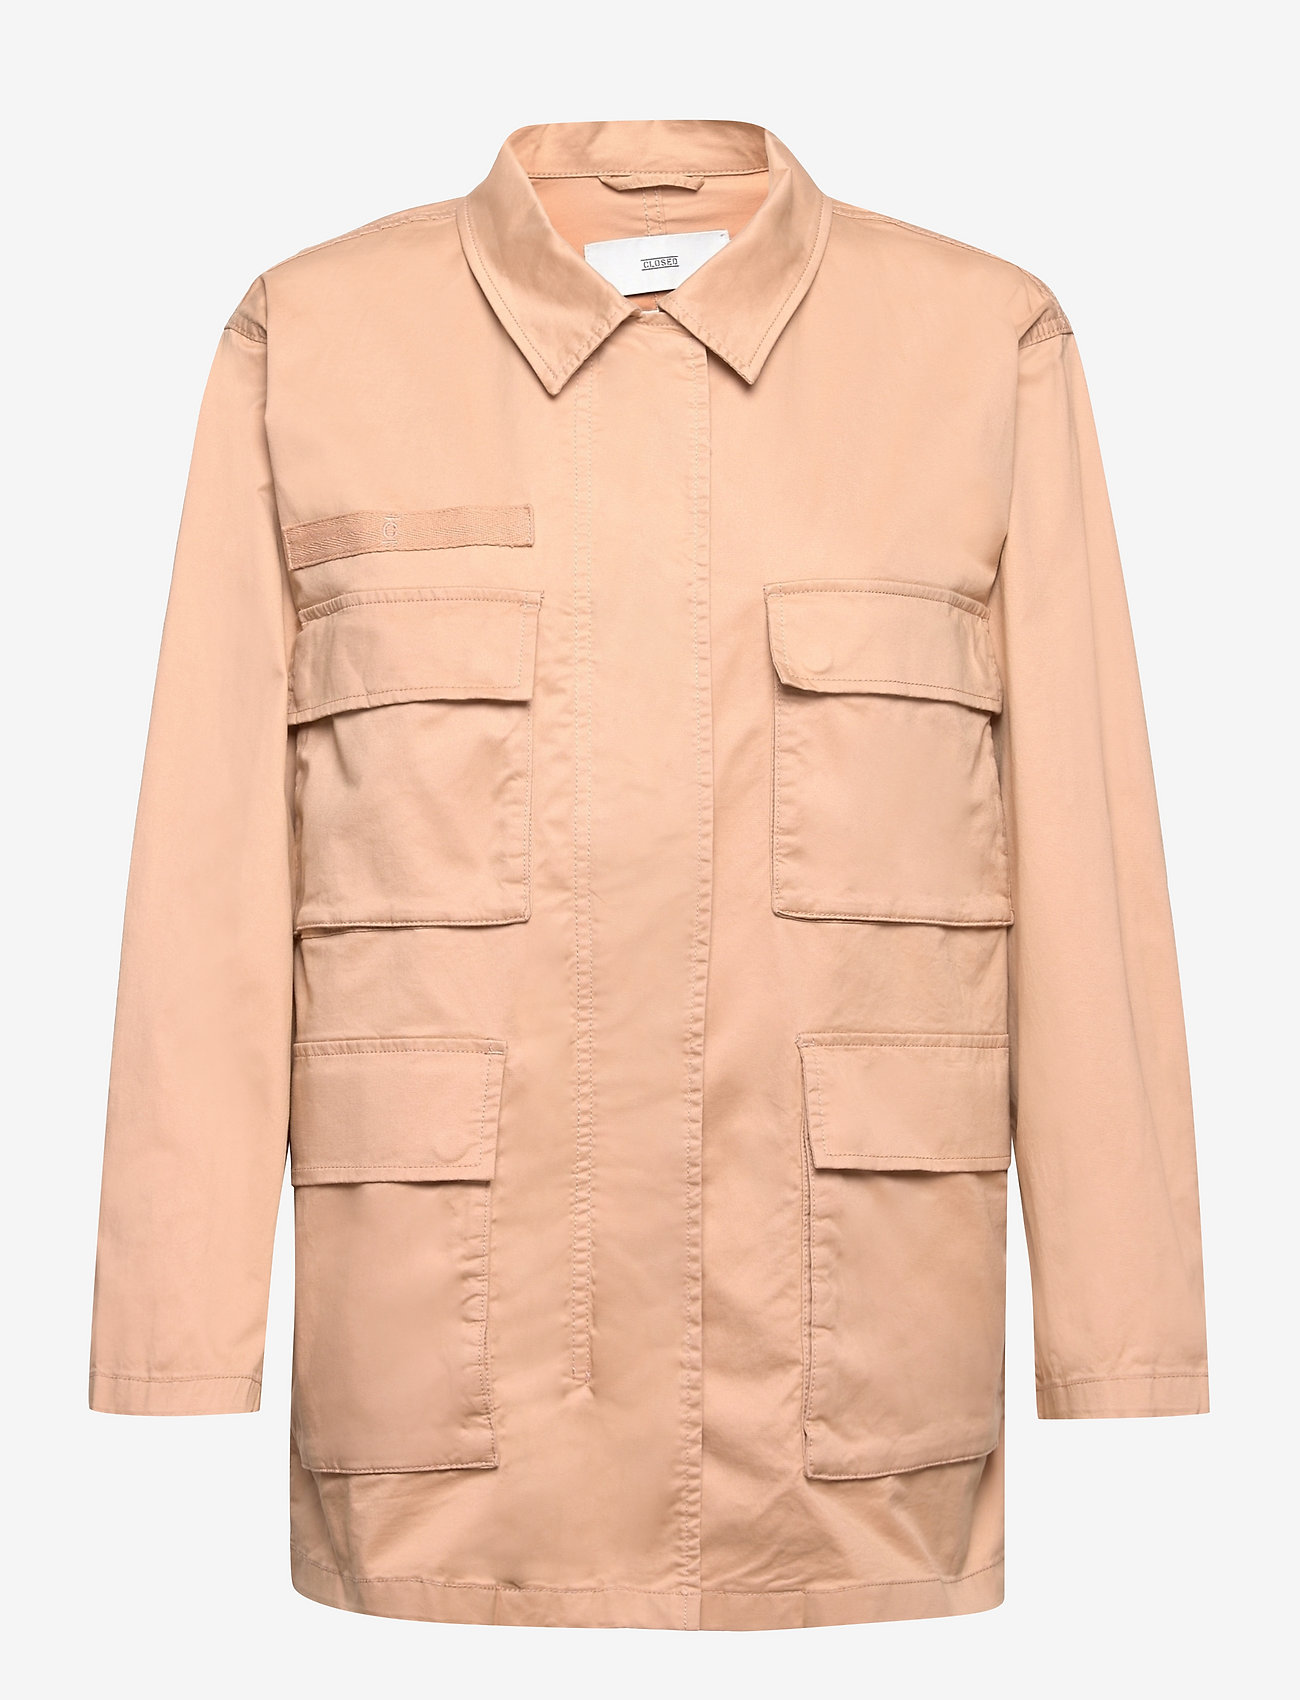 Closed - womens jacket - utility-jacken - sandstone - 0